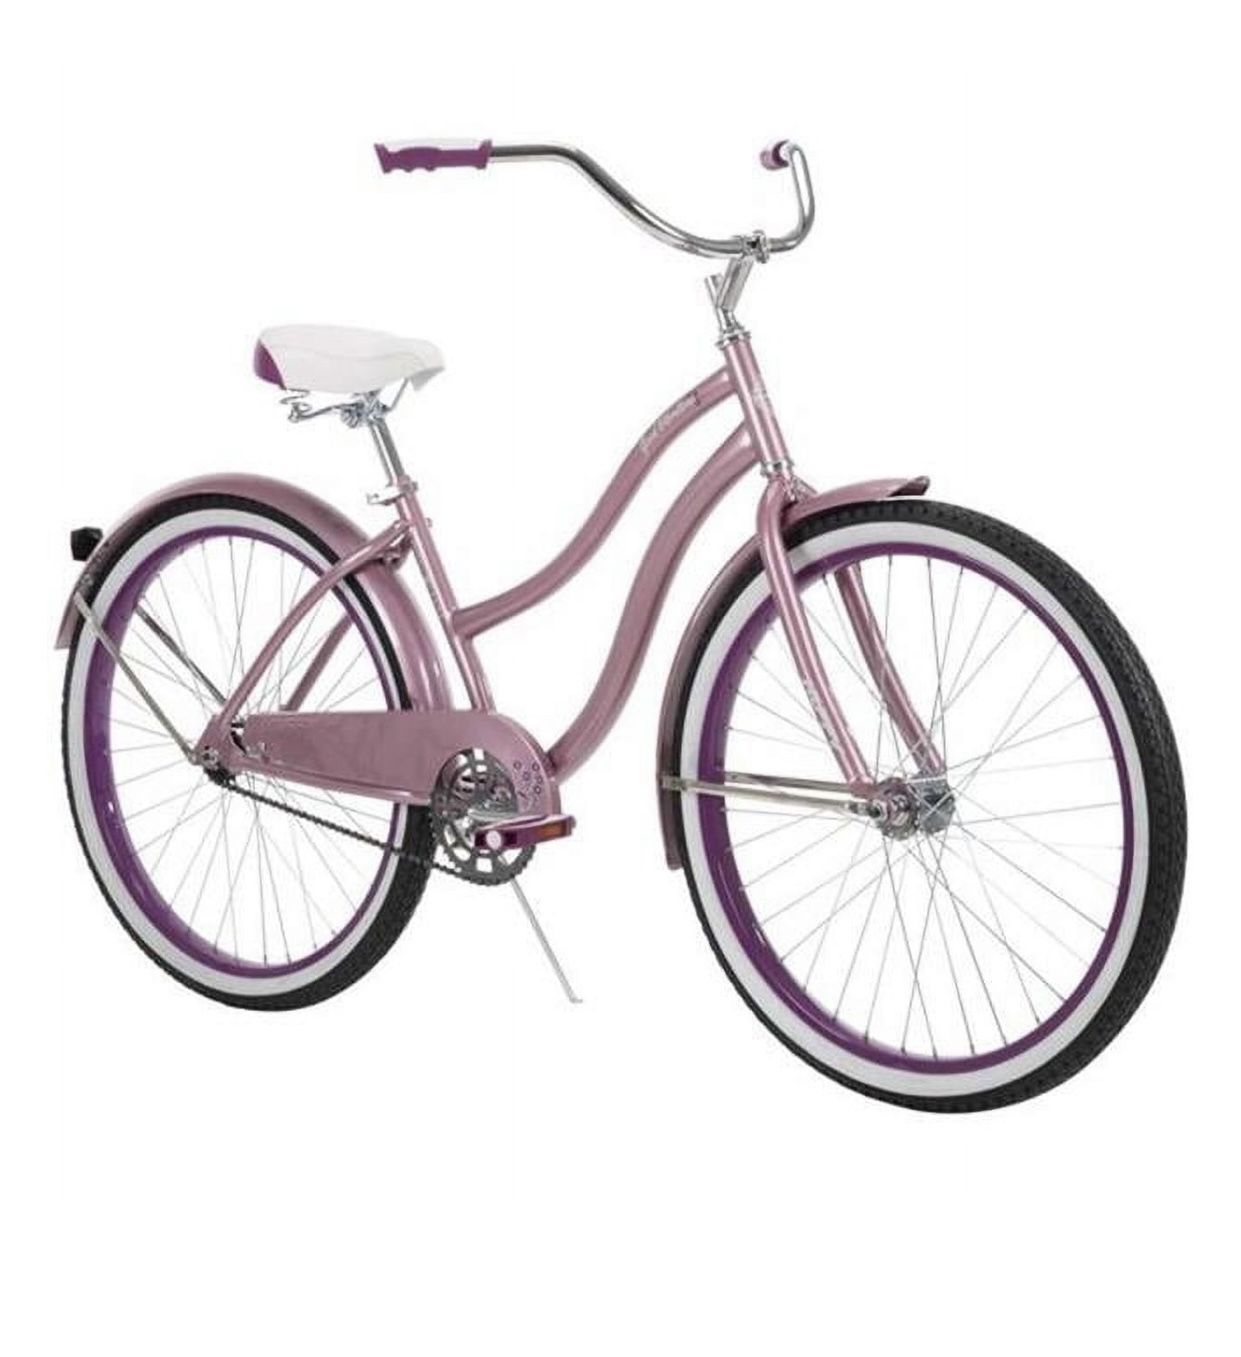 Huffy 26630 26 in. Good Vibrations Women Cruiser Bike, Pink - One Size